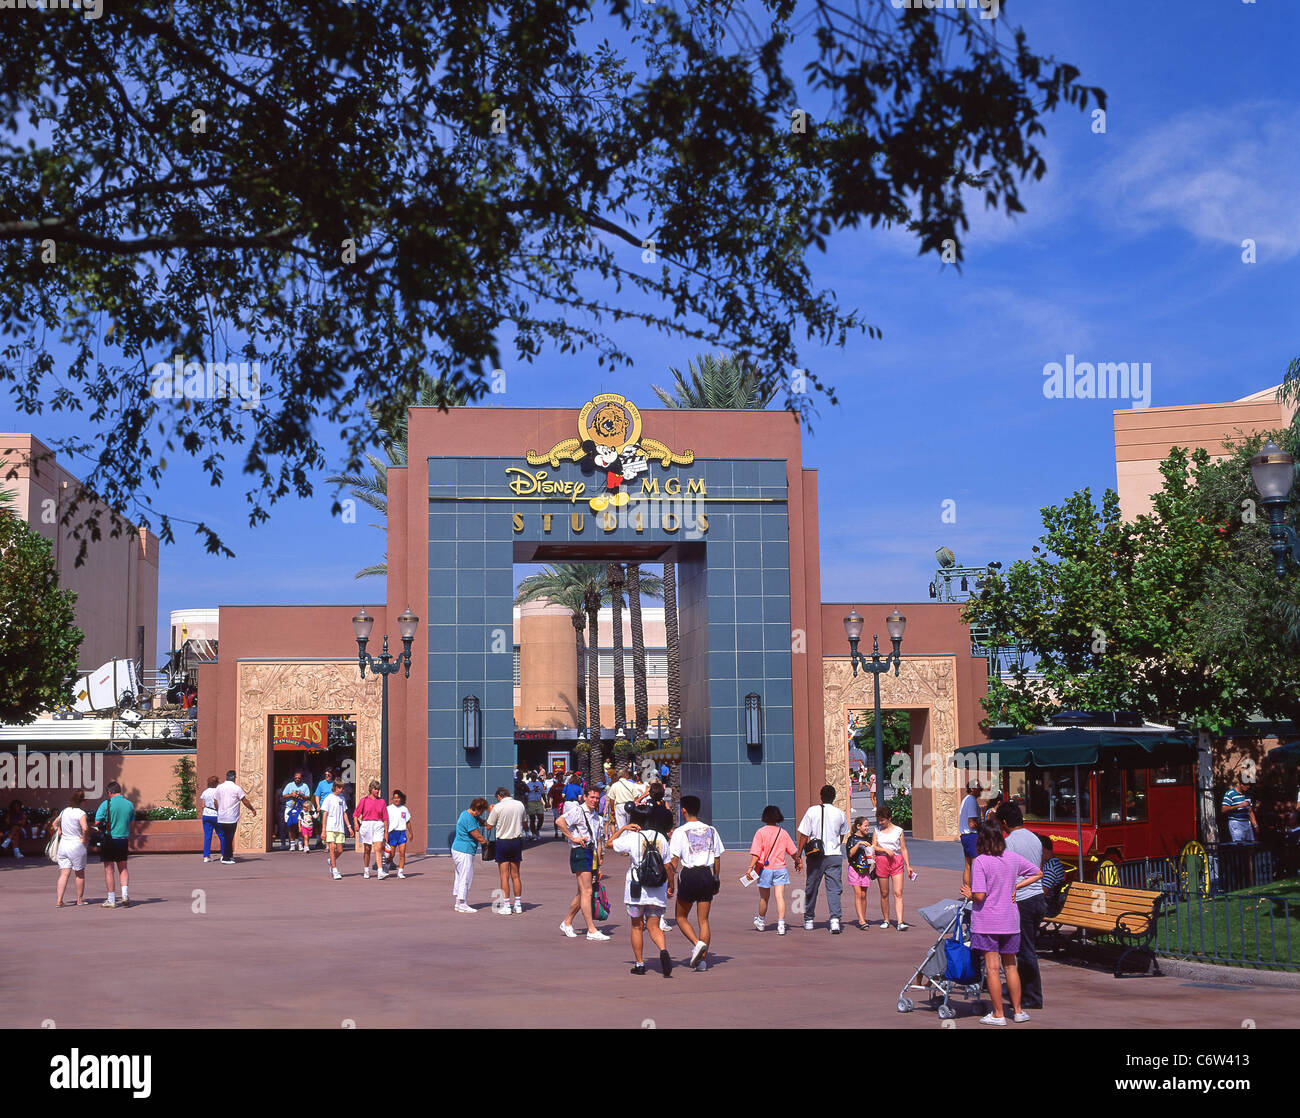 Studios entrance, Disney MGM Studios, Orlando, Florida, United States of America Stock Photo